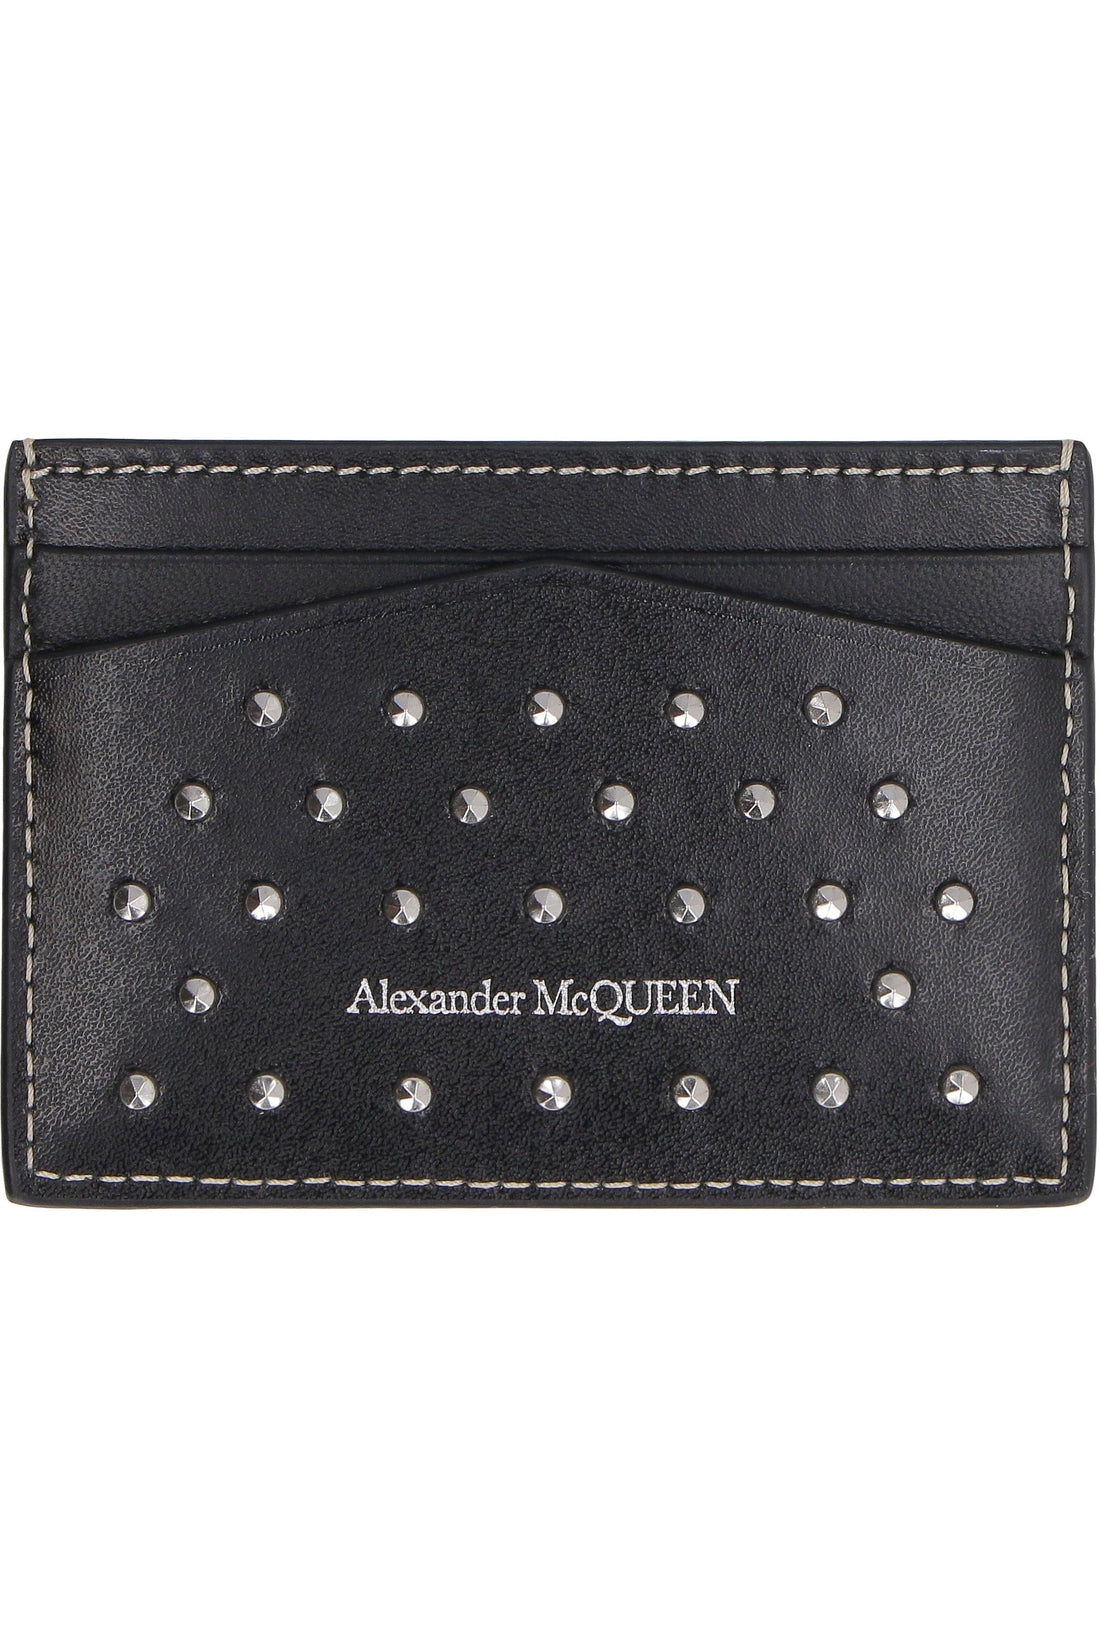 Alexander McQueen-OUTLET-SALE-Skull studded leather wallet-ARCHIVIST